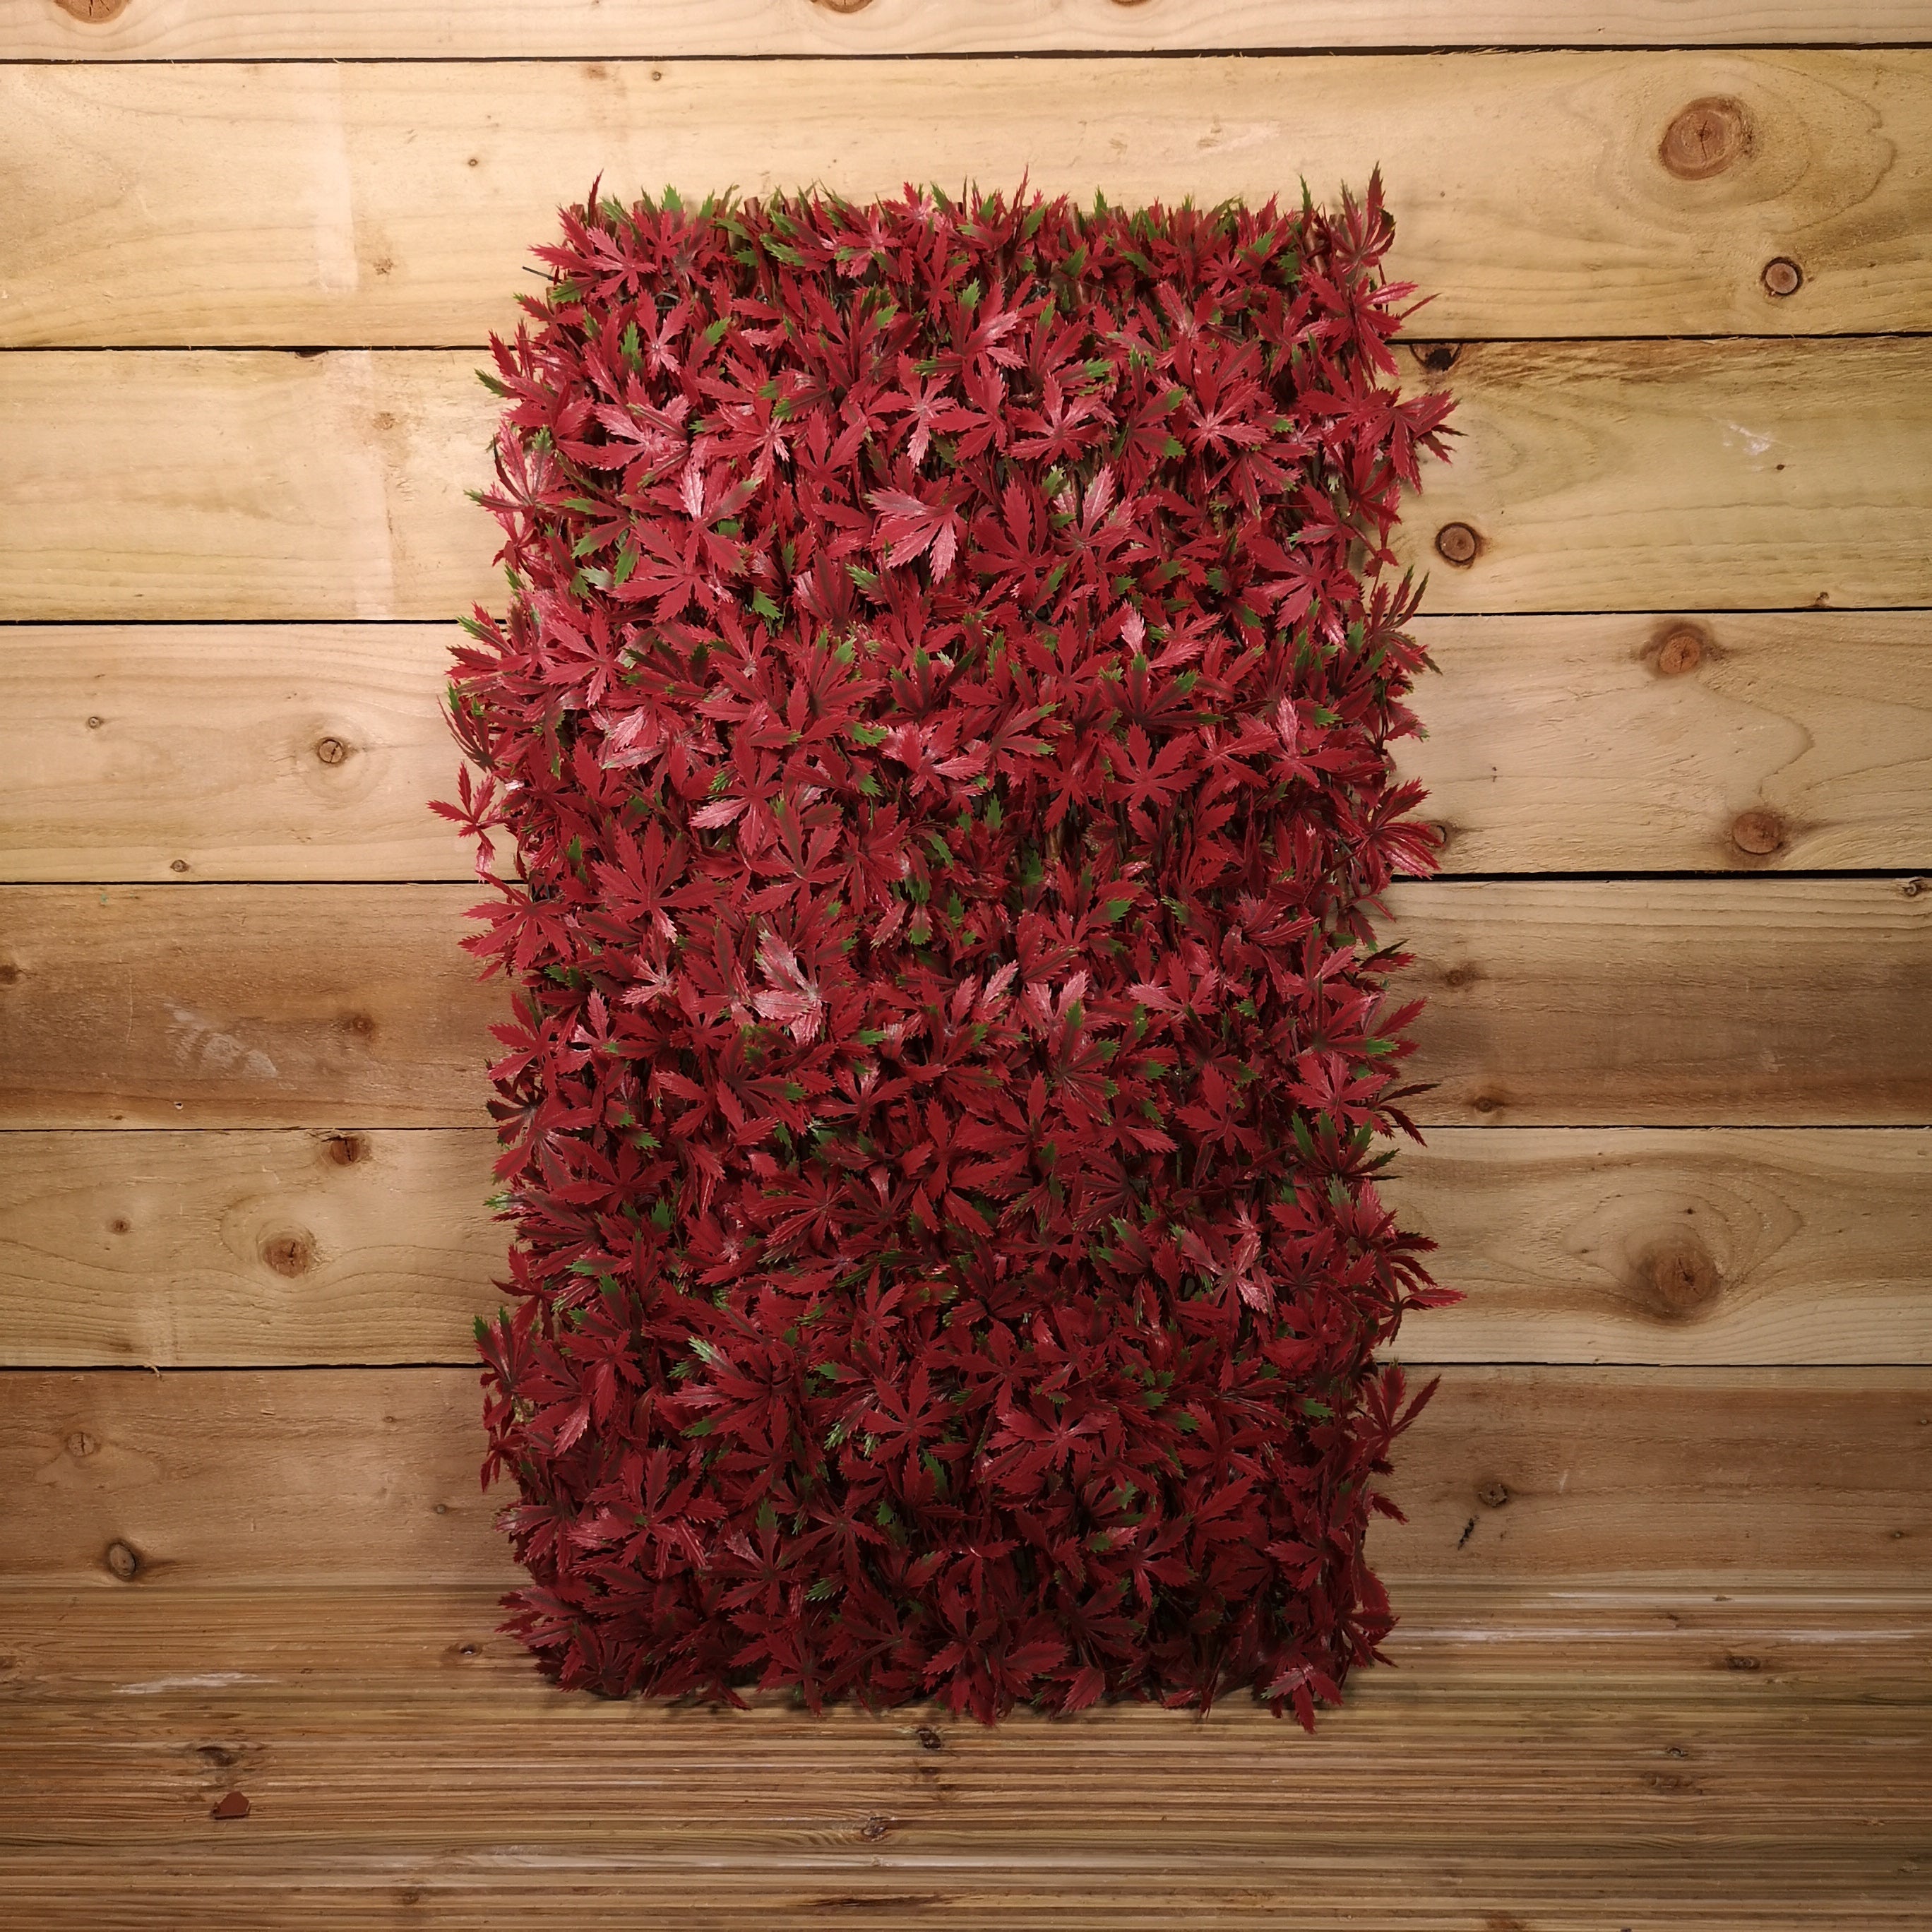 180cm x 60cm Artificial Fence Garden Trellis Privacy Screening Indoor Outdoor Wall Panel - Red Acer